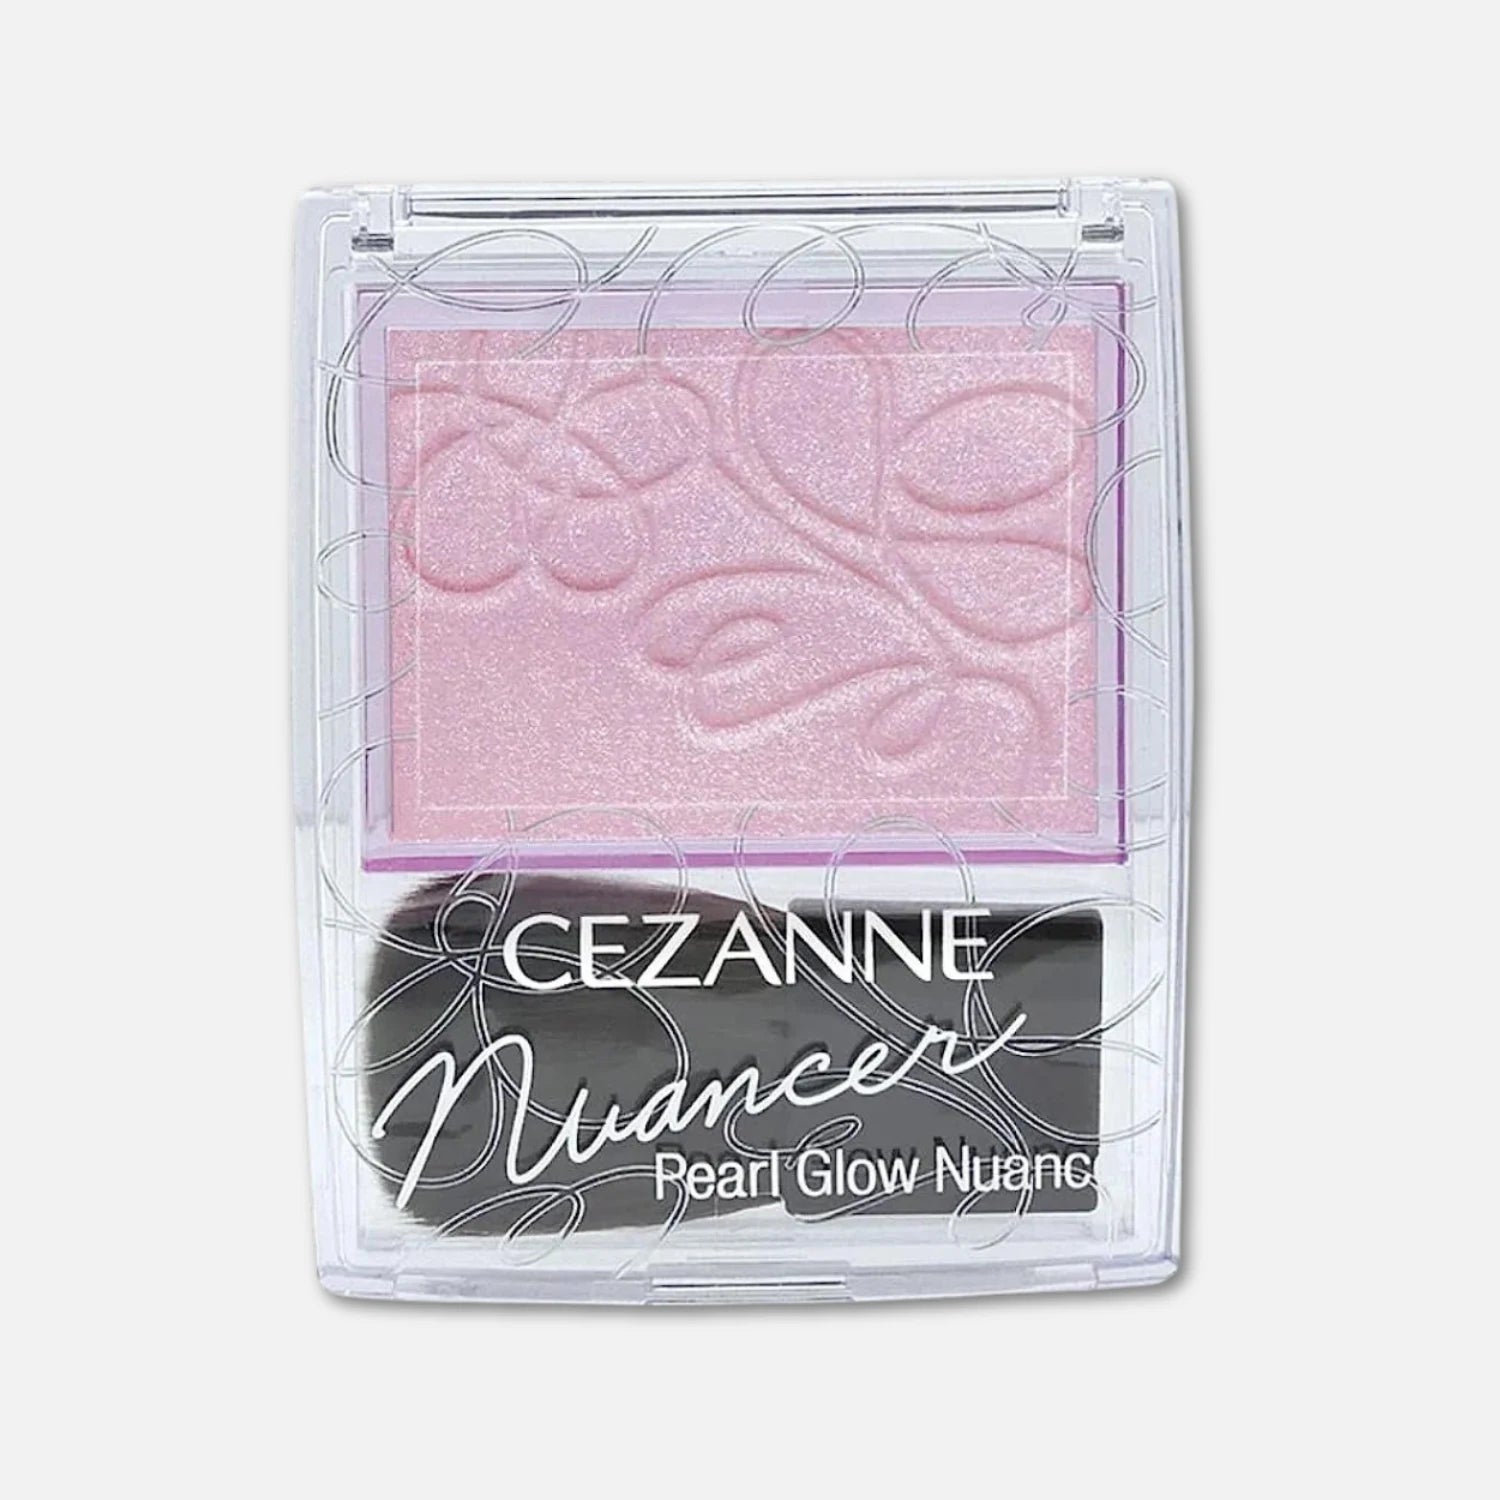 Cezanne Nuancer Pearl Glow Nuance Highlighter 2.4g - Buy Me Japan